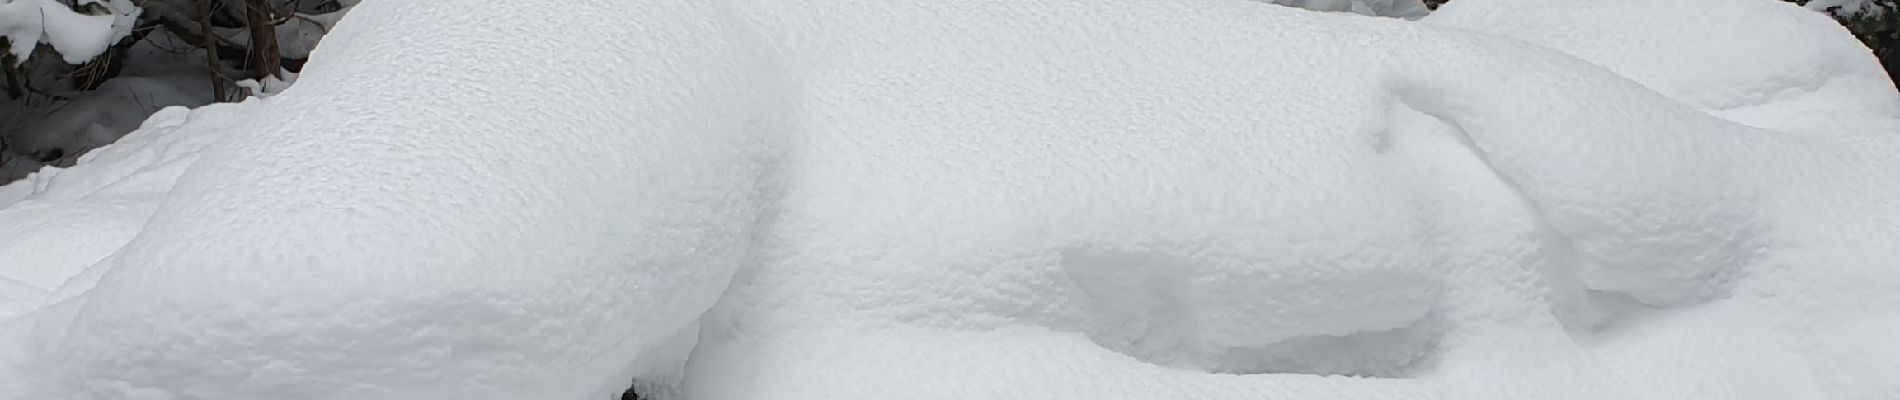 Tocht Sneeuwschoenen Bois-d'Amont - bois d'amont - Photo